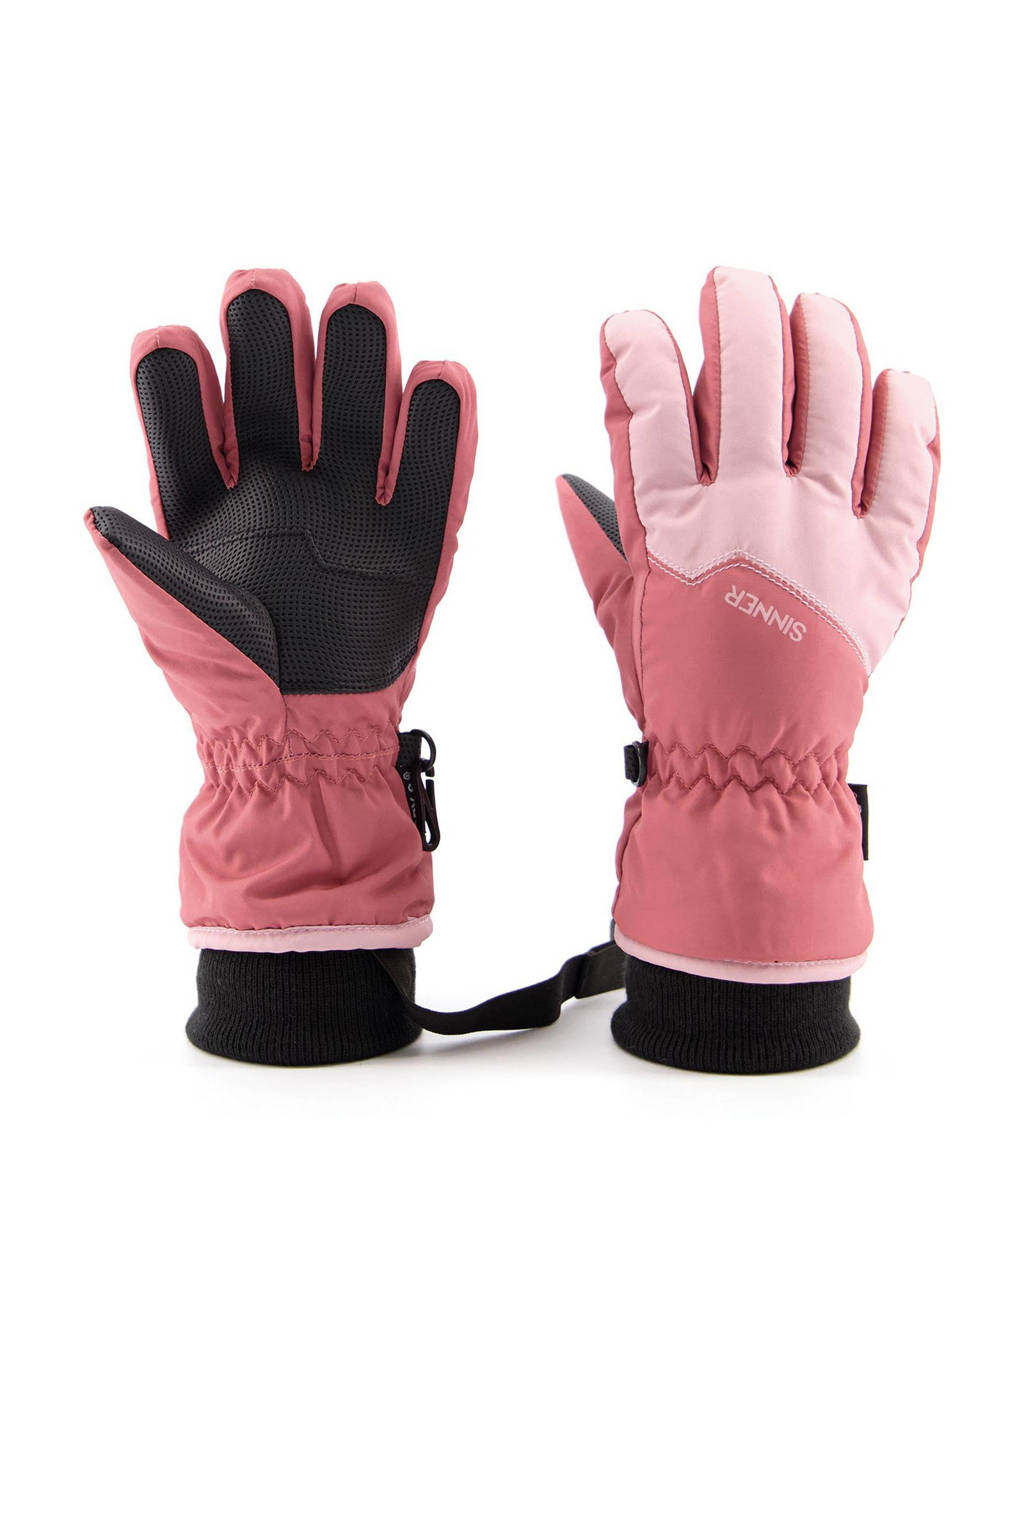 Sinner skihandschoenen Phoenix roze/zwart, Roze/zwart